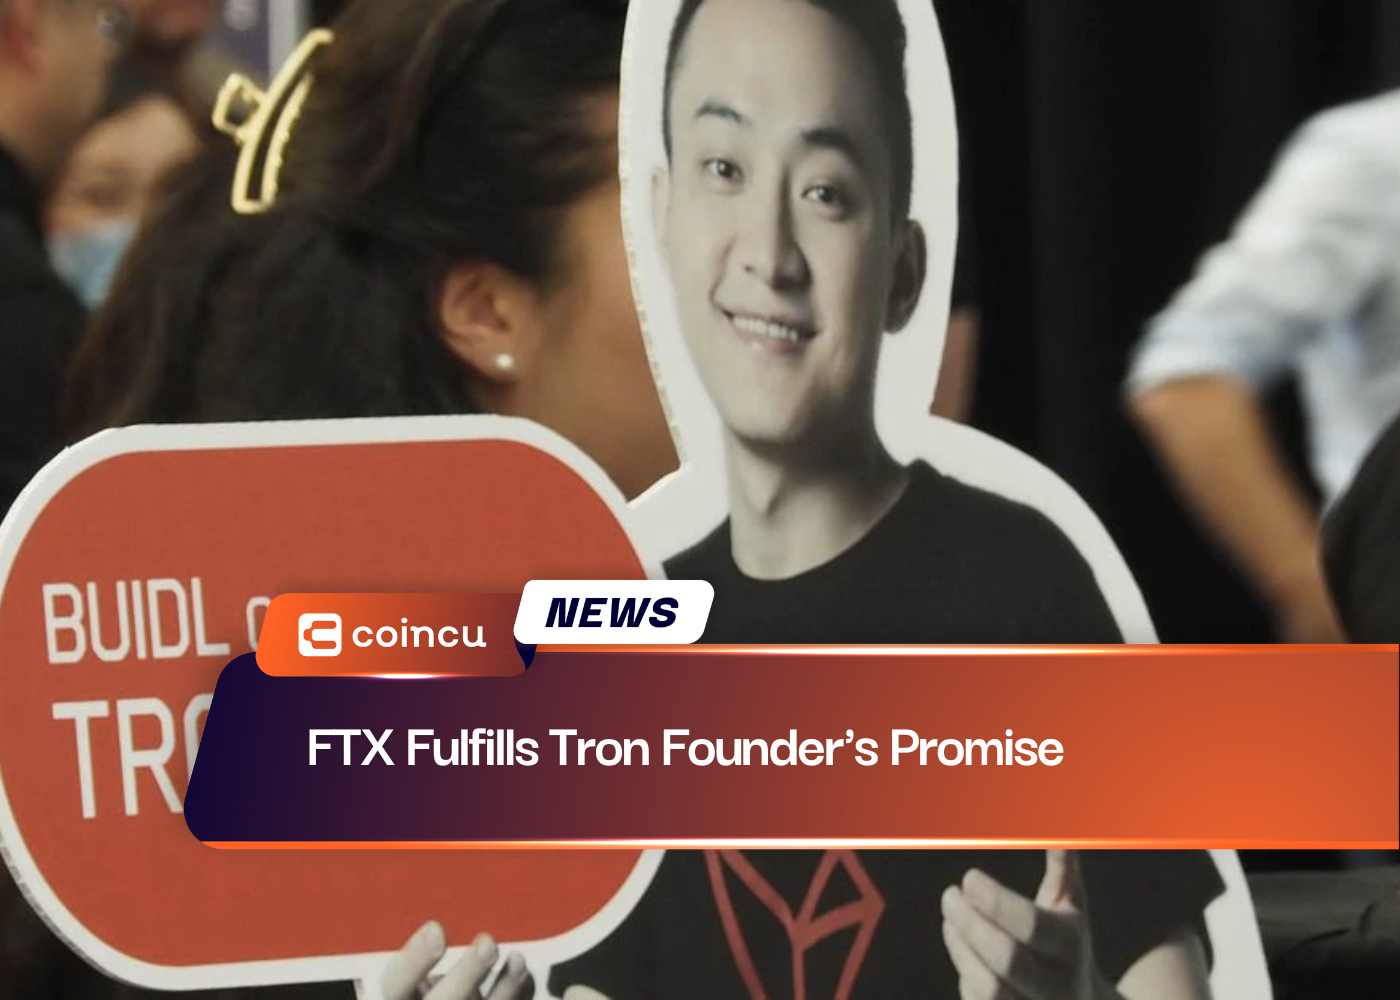 FTX Fulfills Tron Founder's Promise